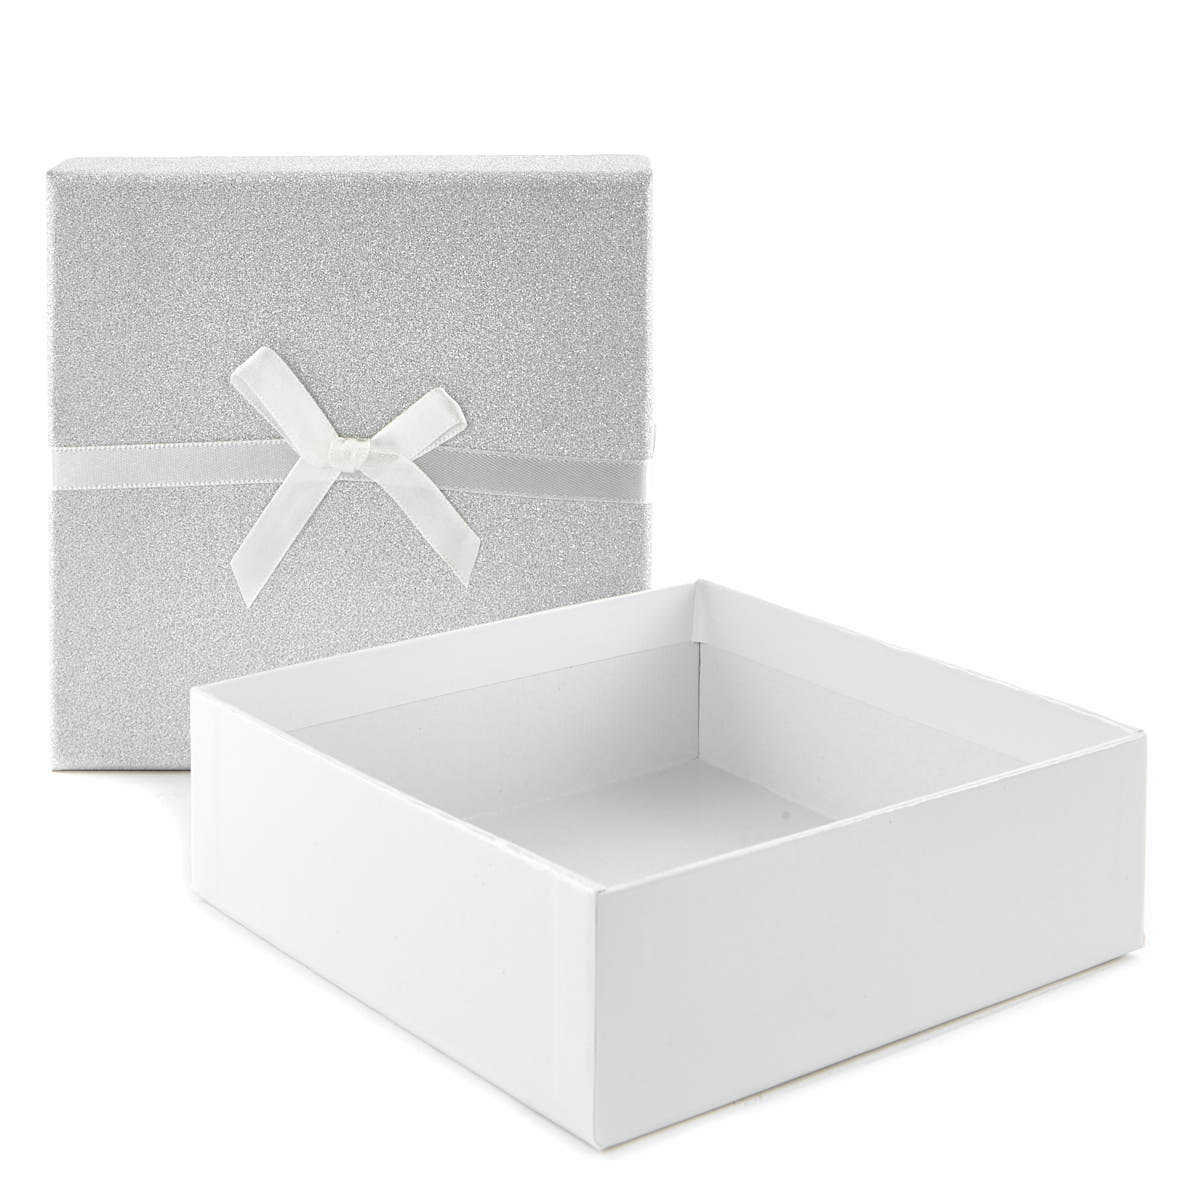 Large Luxury Gift Box - White & Silver Glitter